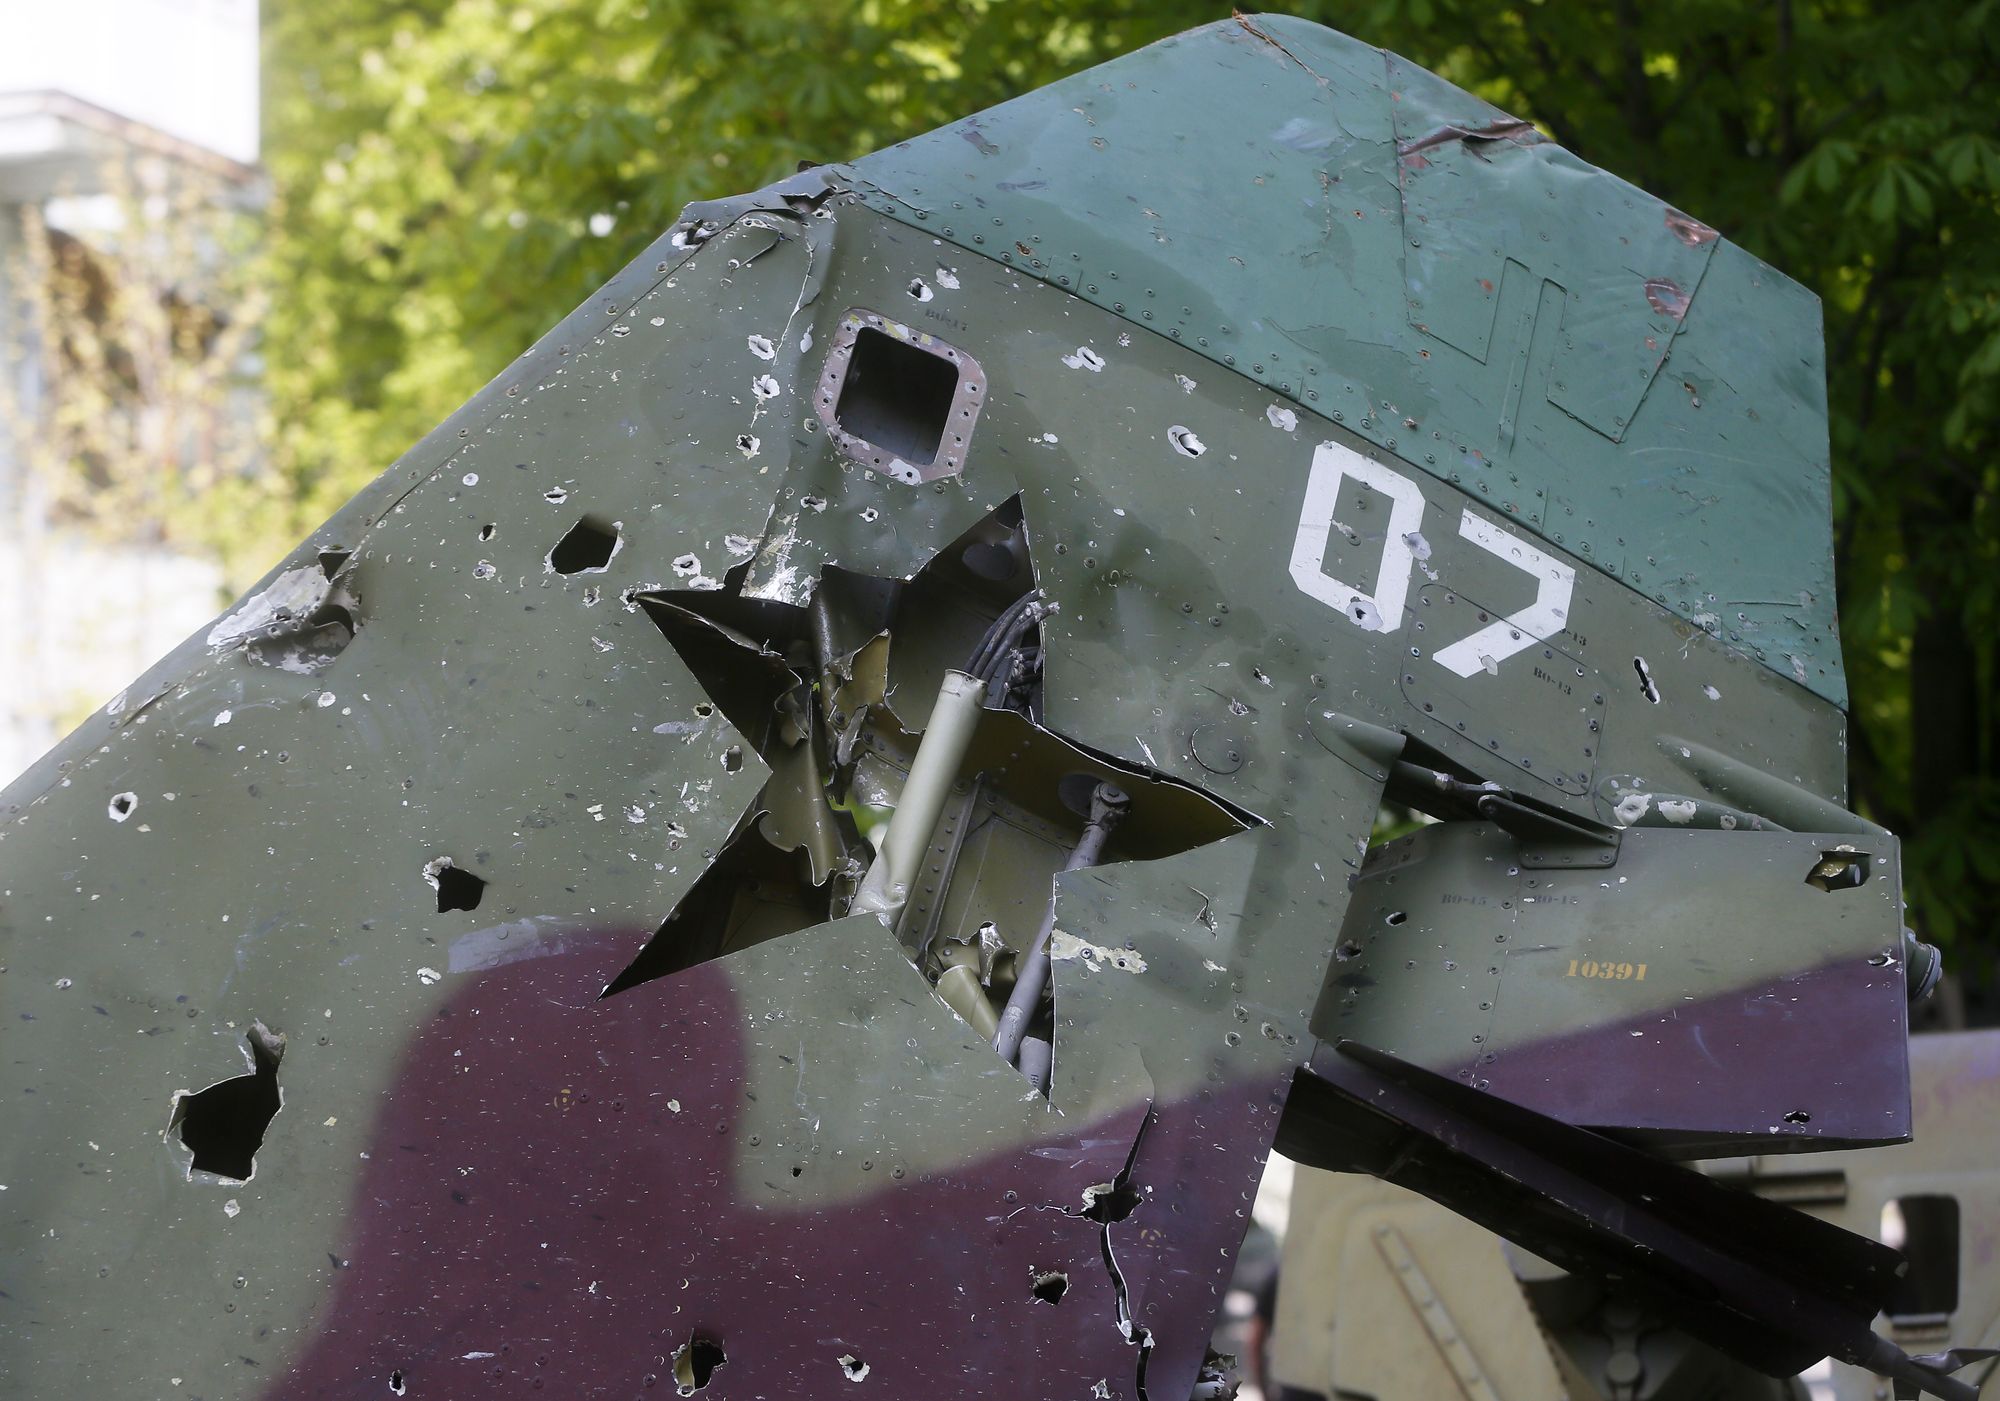 Ukraine shoots down Russian Su-25 aircraft in Donetsk Oblast, Zelensky says